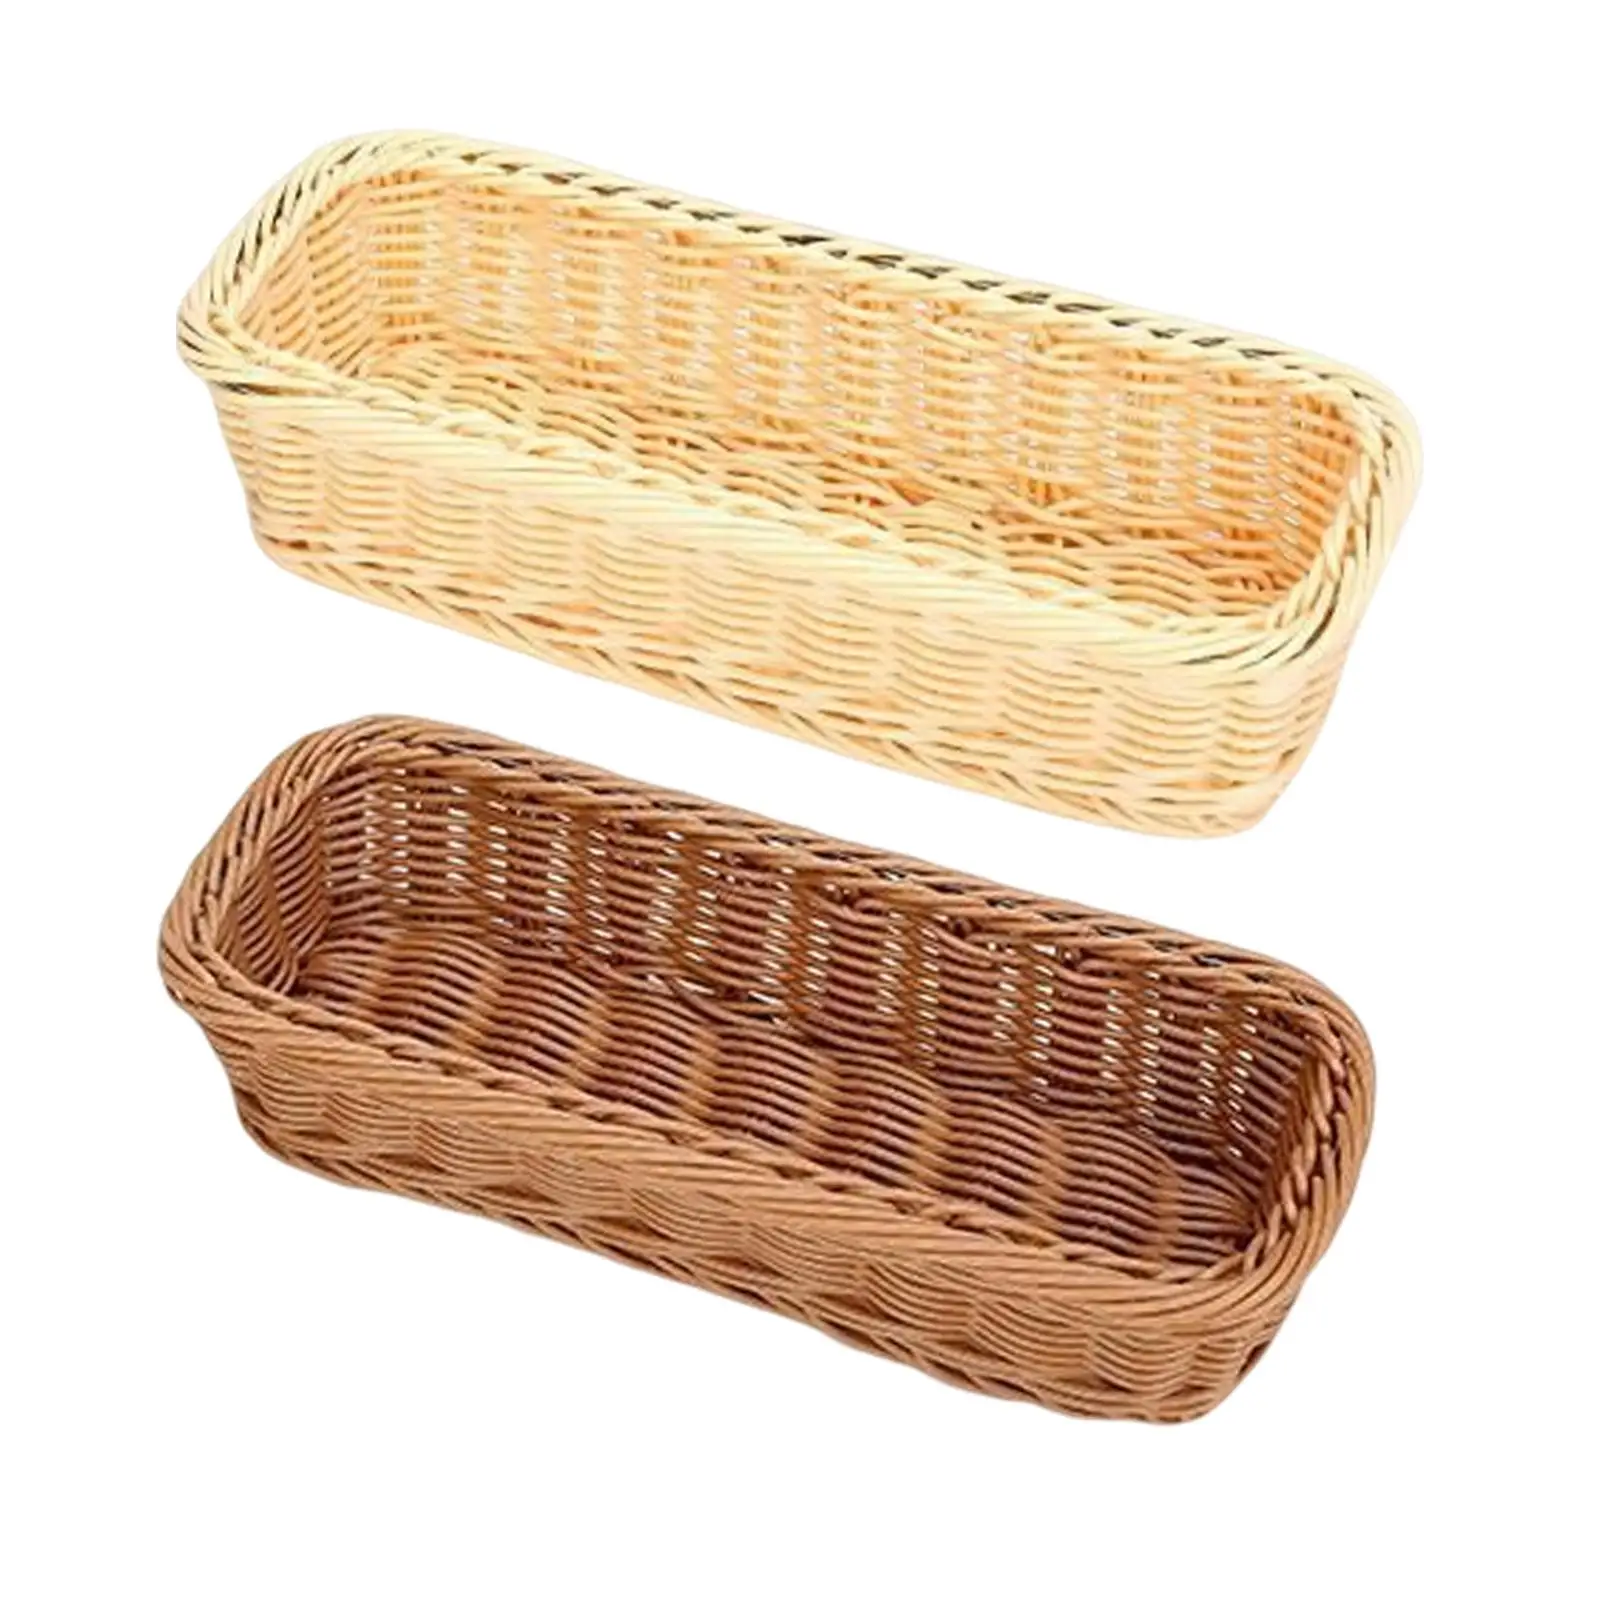 Woven Storage Baskets Handmade Bread Trays for Shelves Napkins Forks